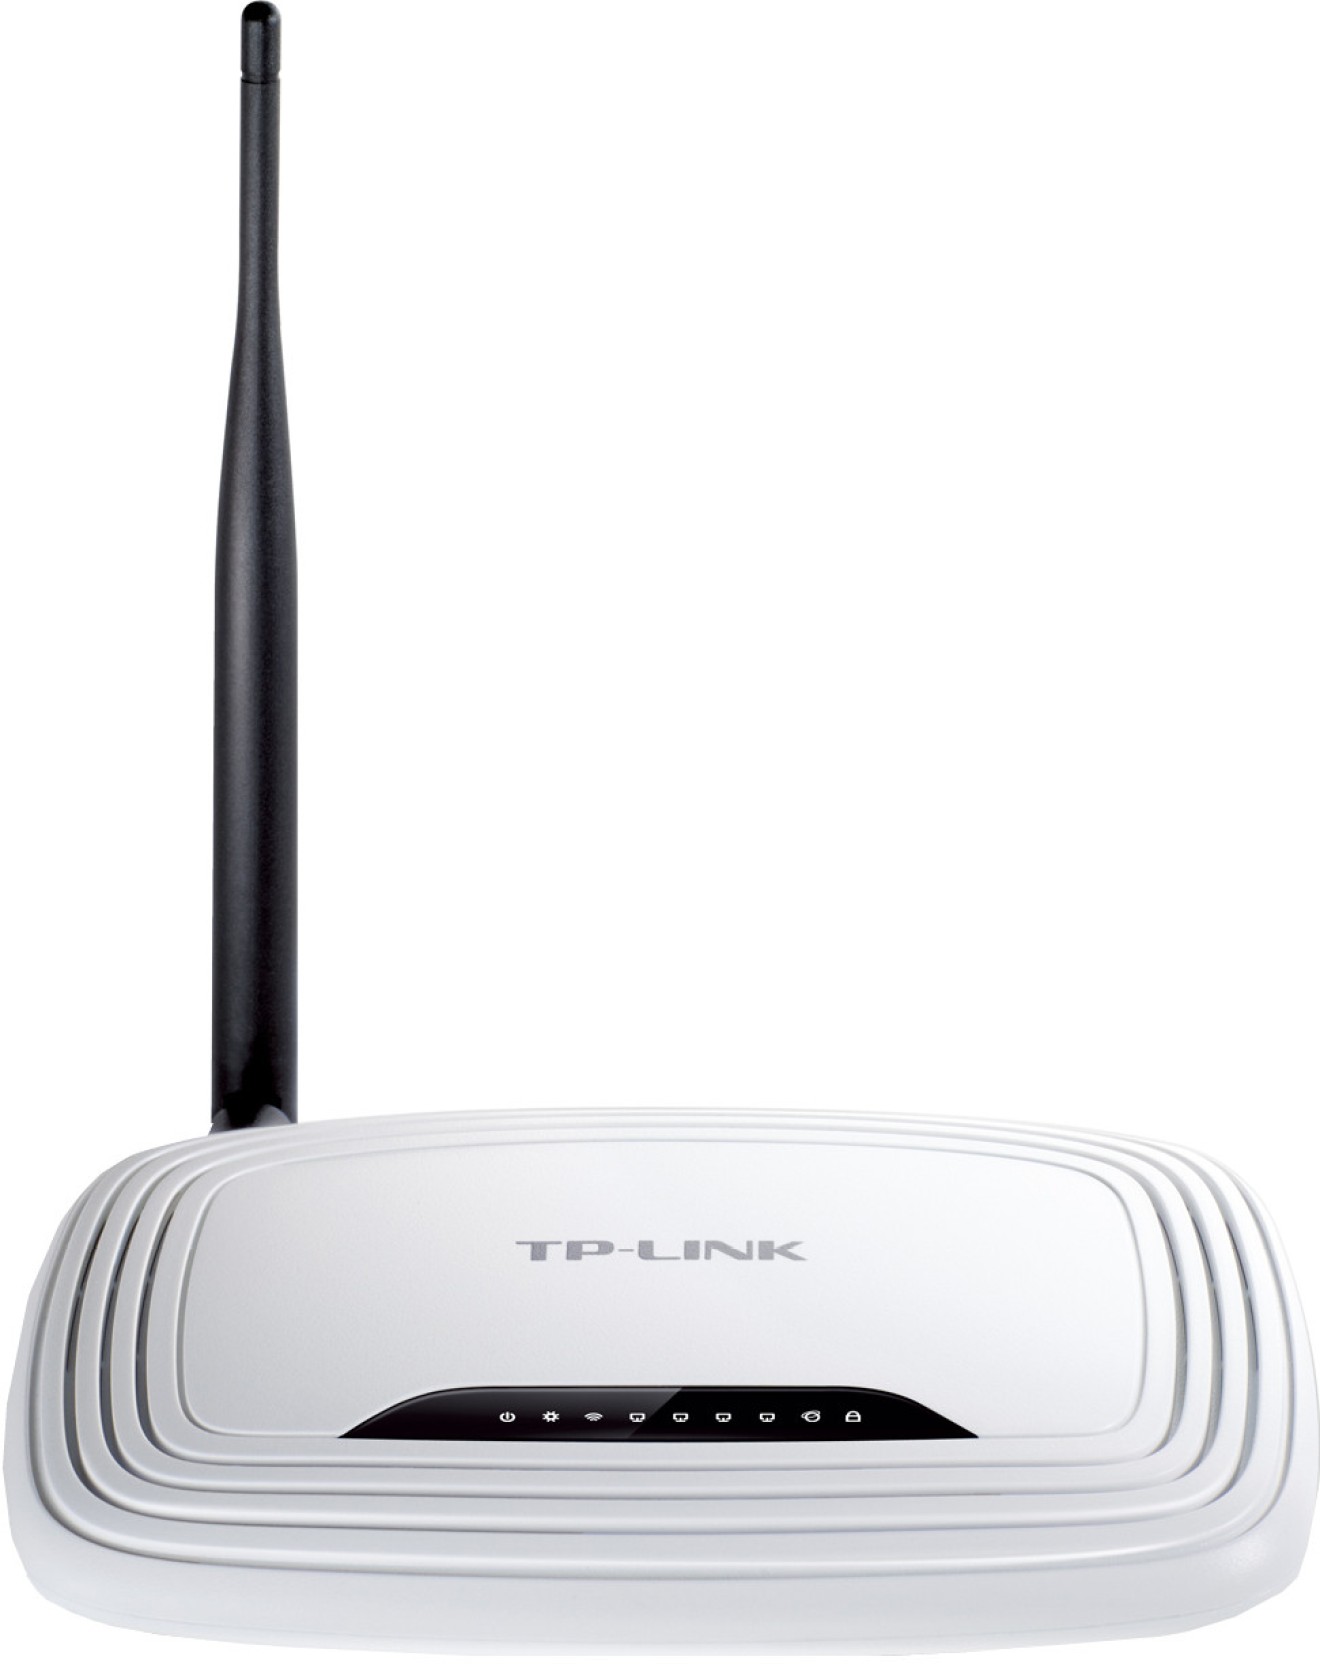  TP LINK TL WR740N 150Mbps Wireless N Router TP Link 